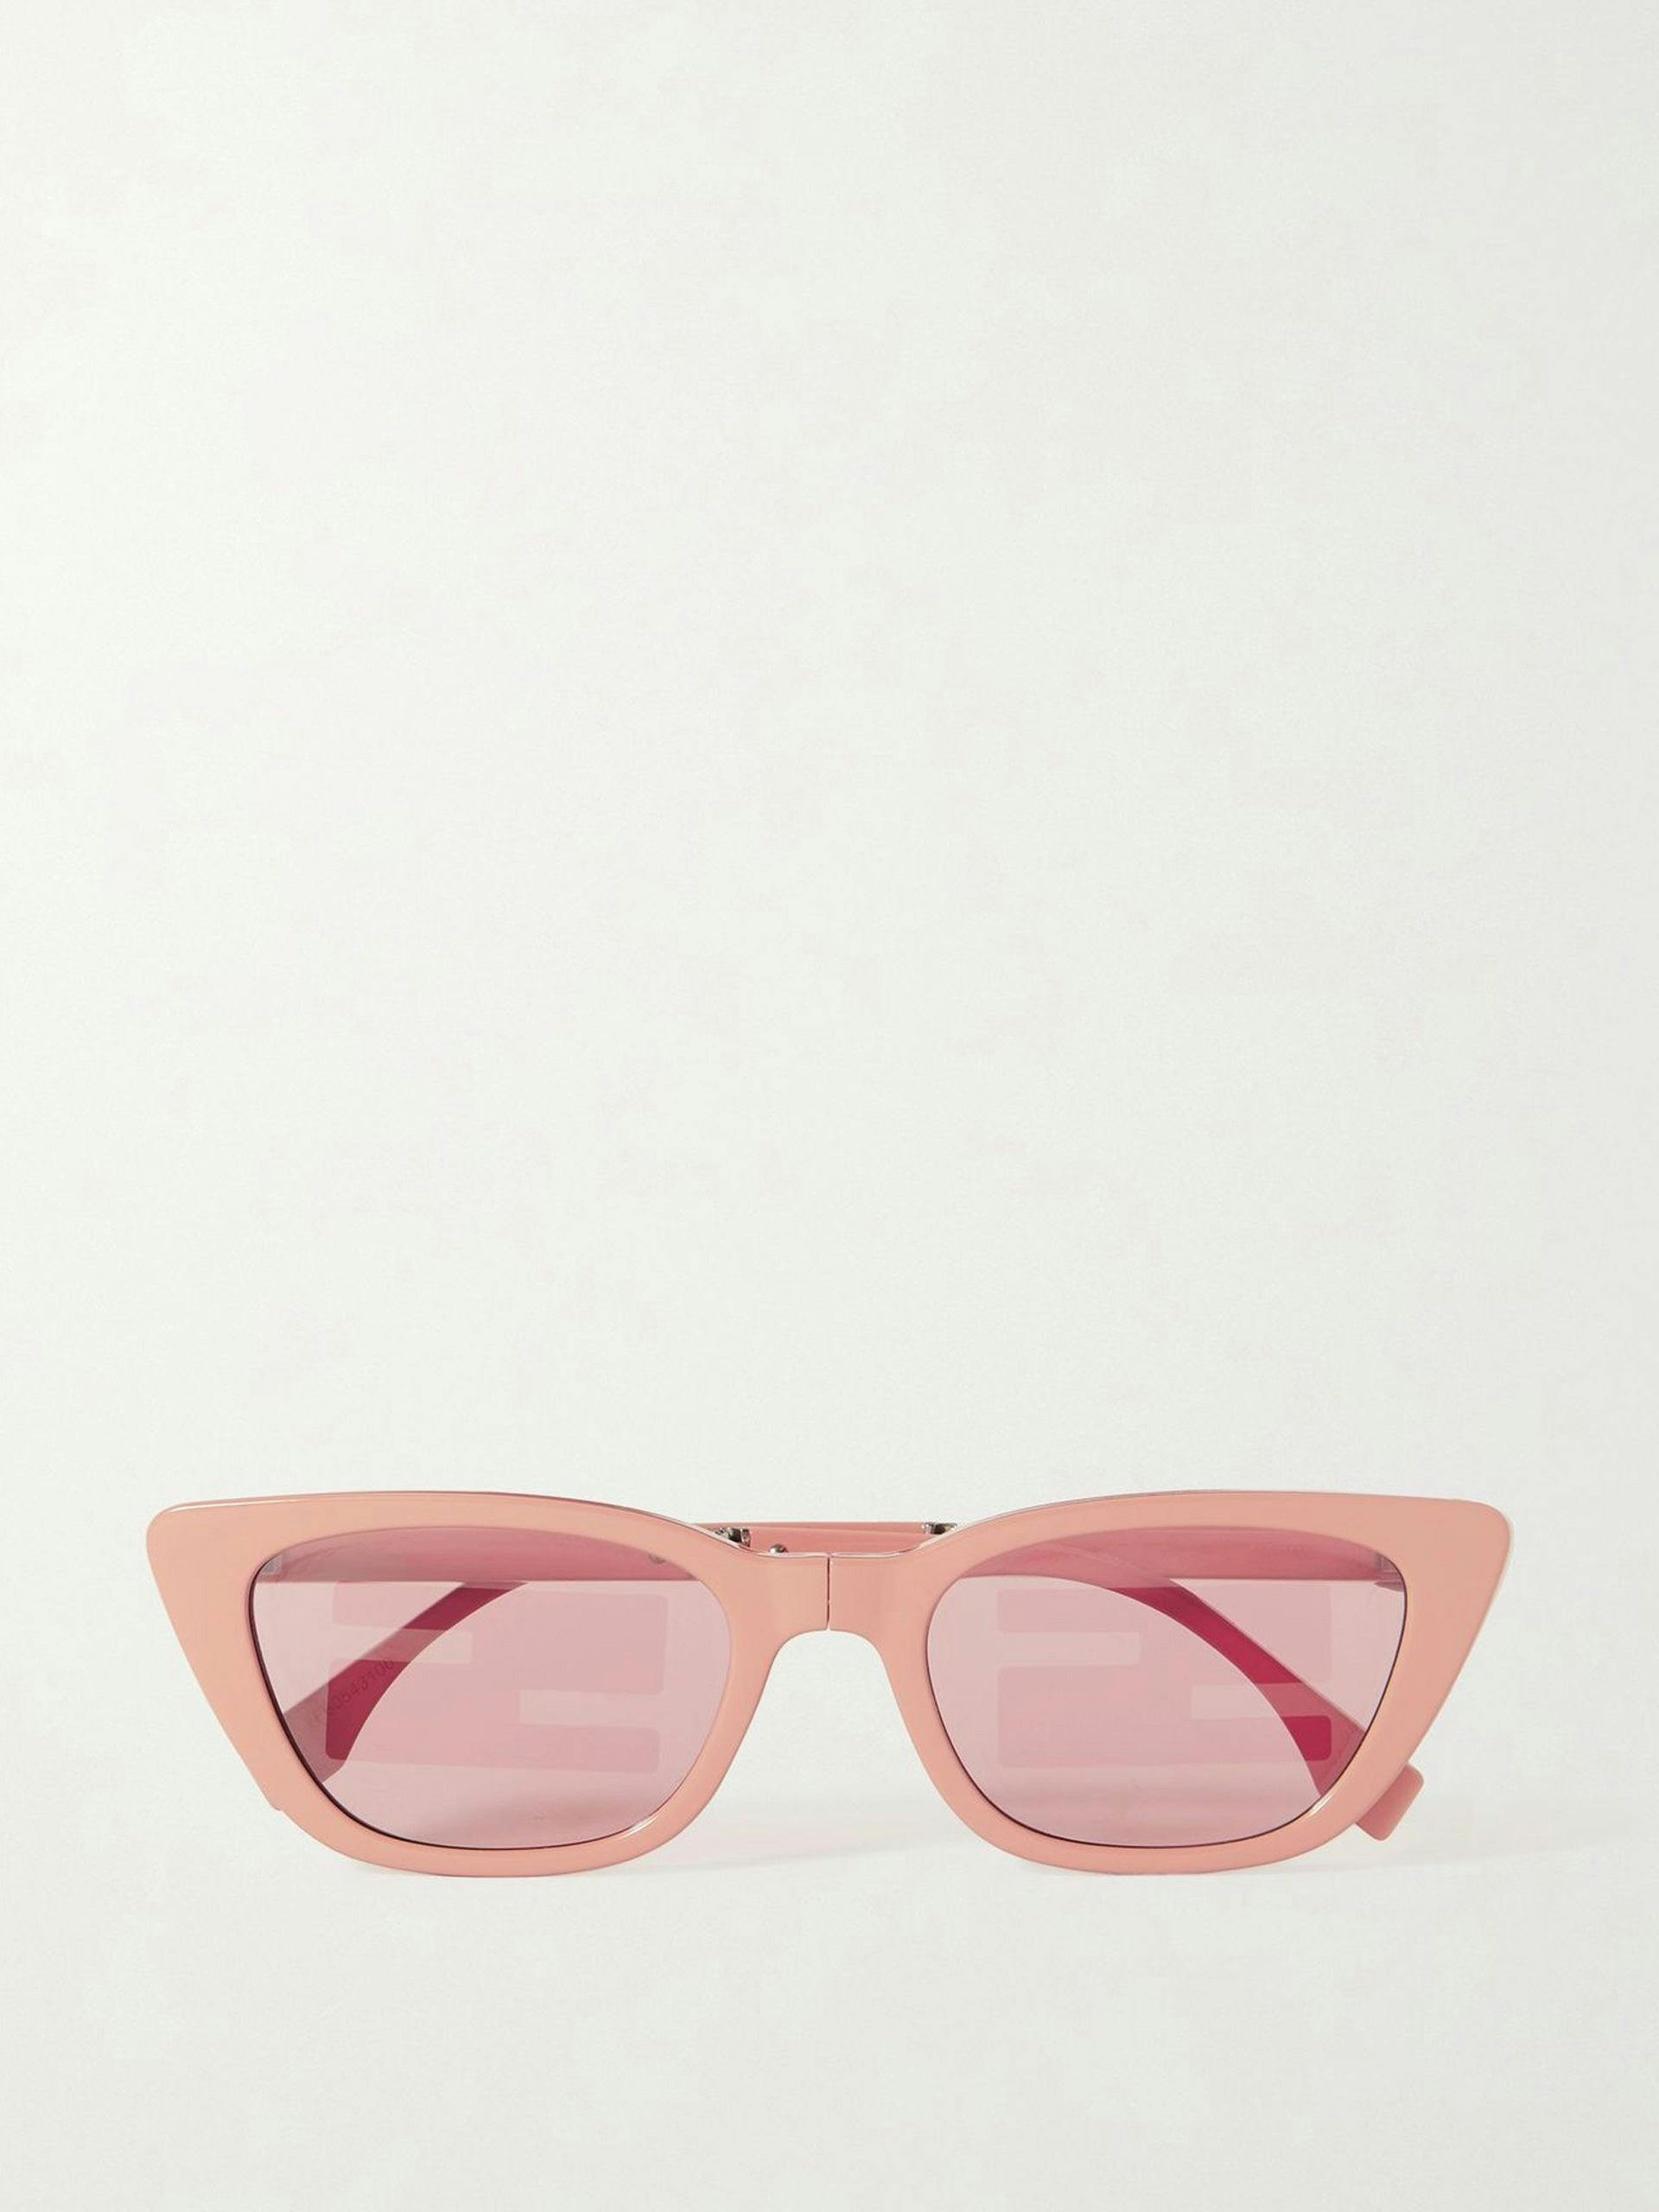 Pink Cat Eye sunglasses